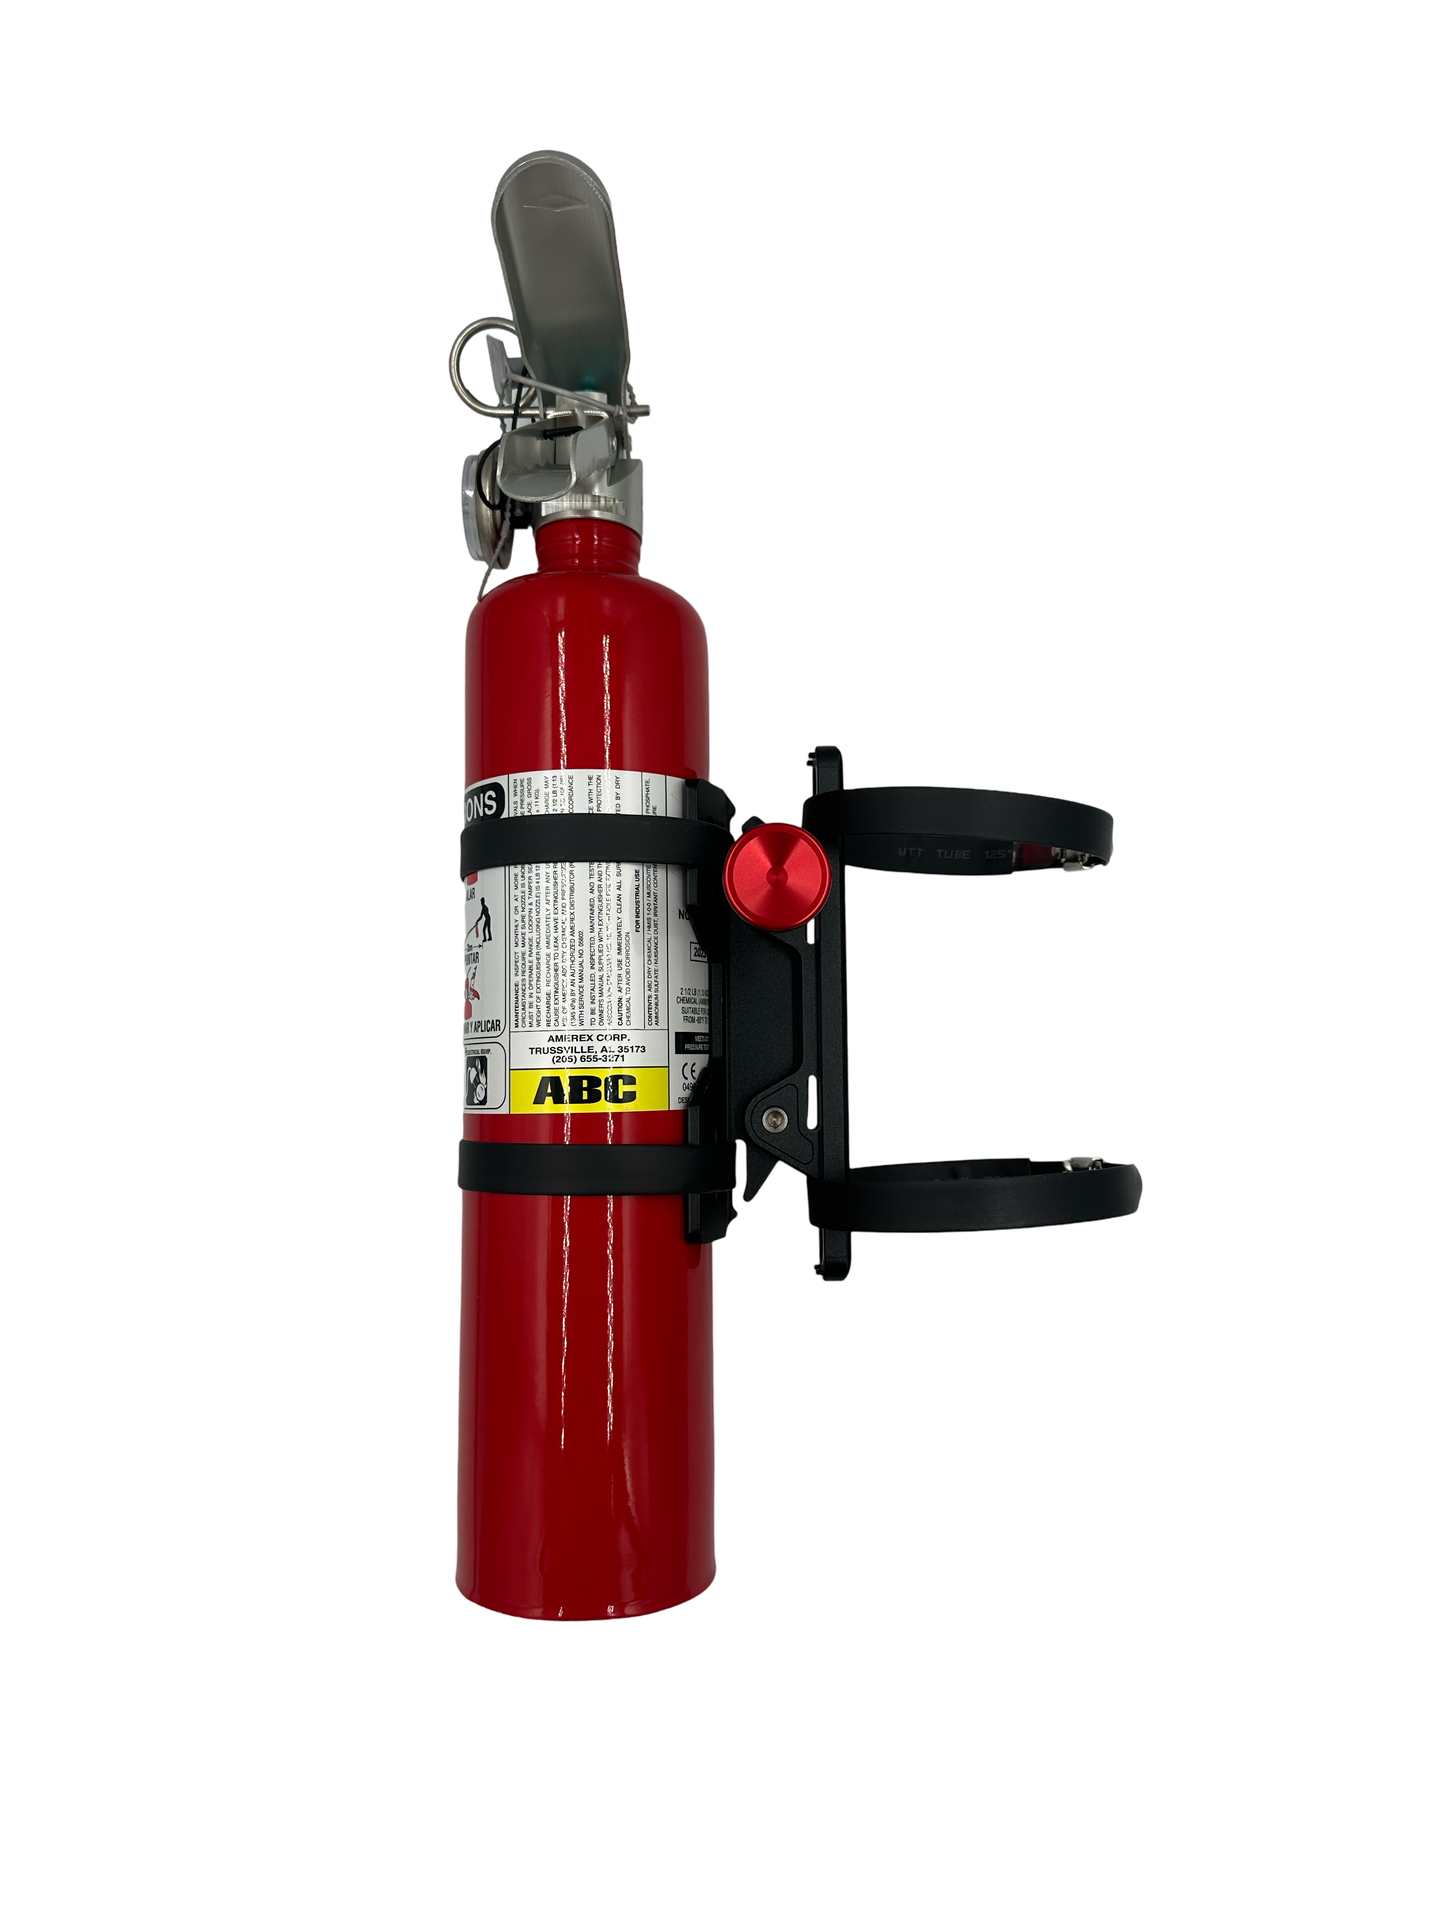 UTV Fire Extinguisher and Mount